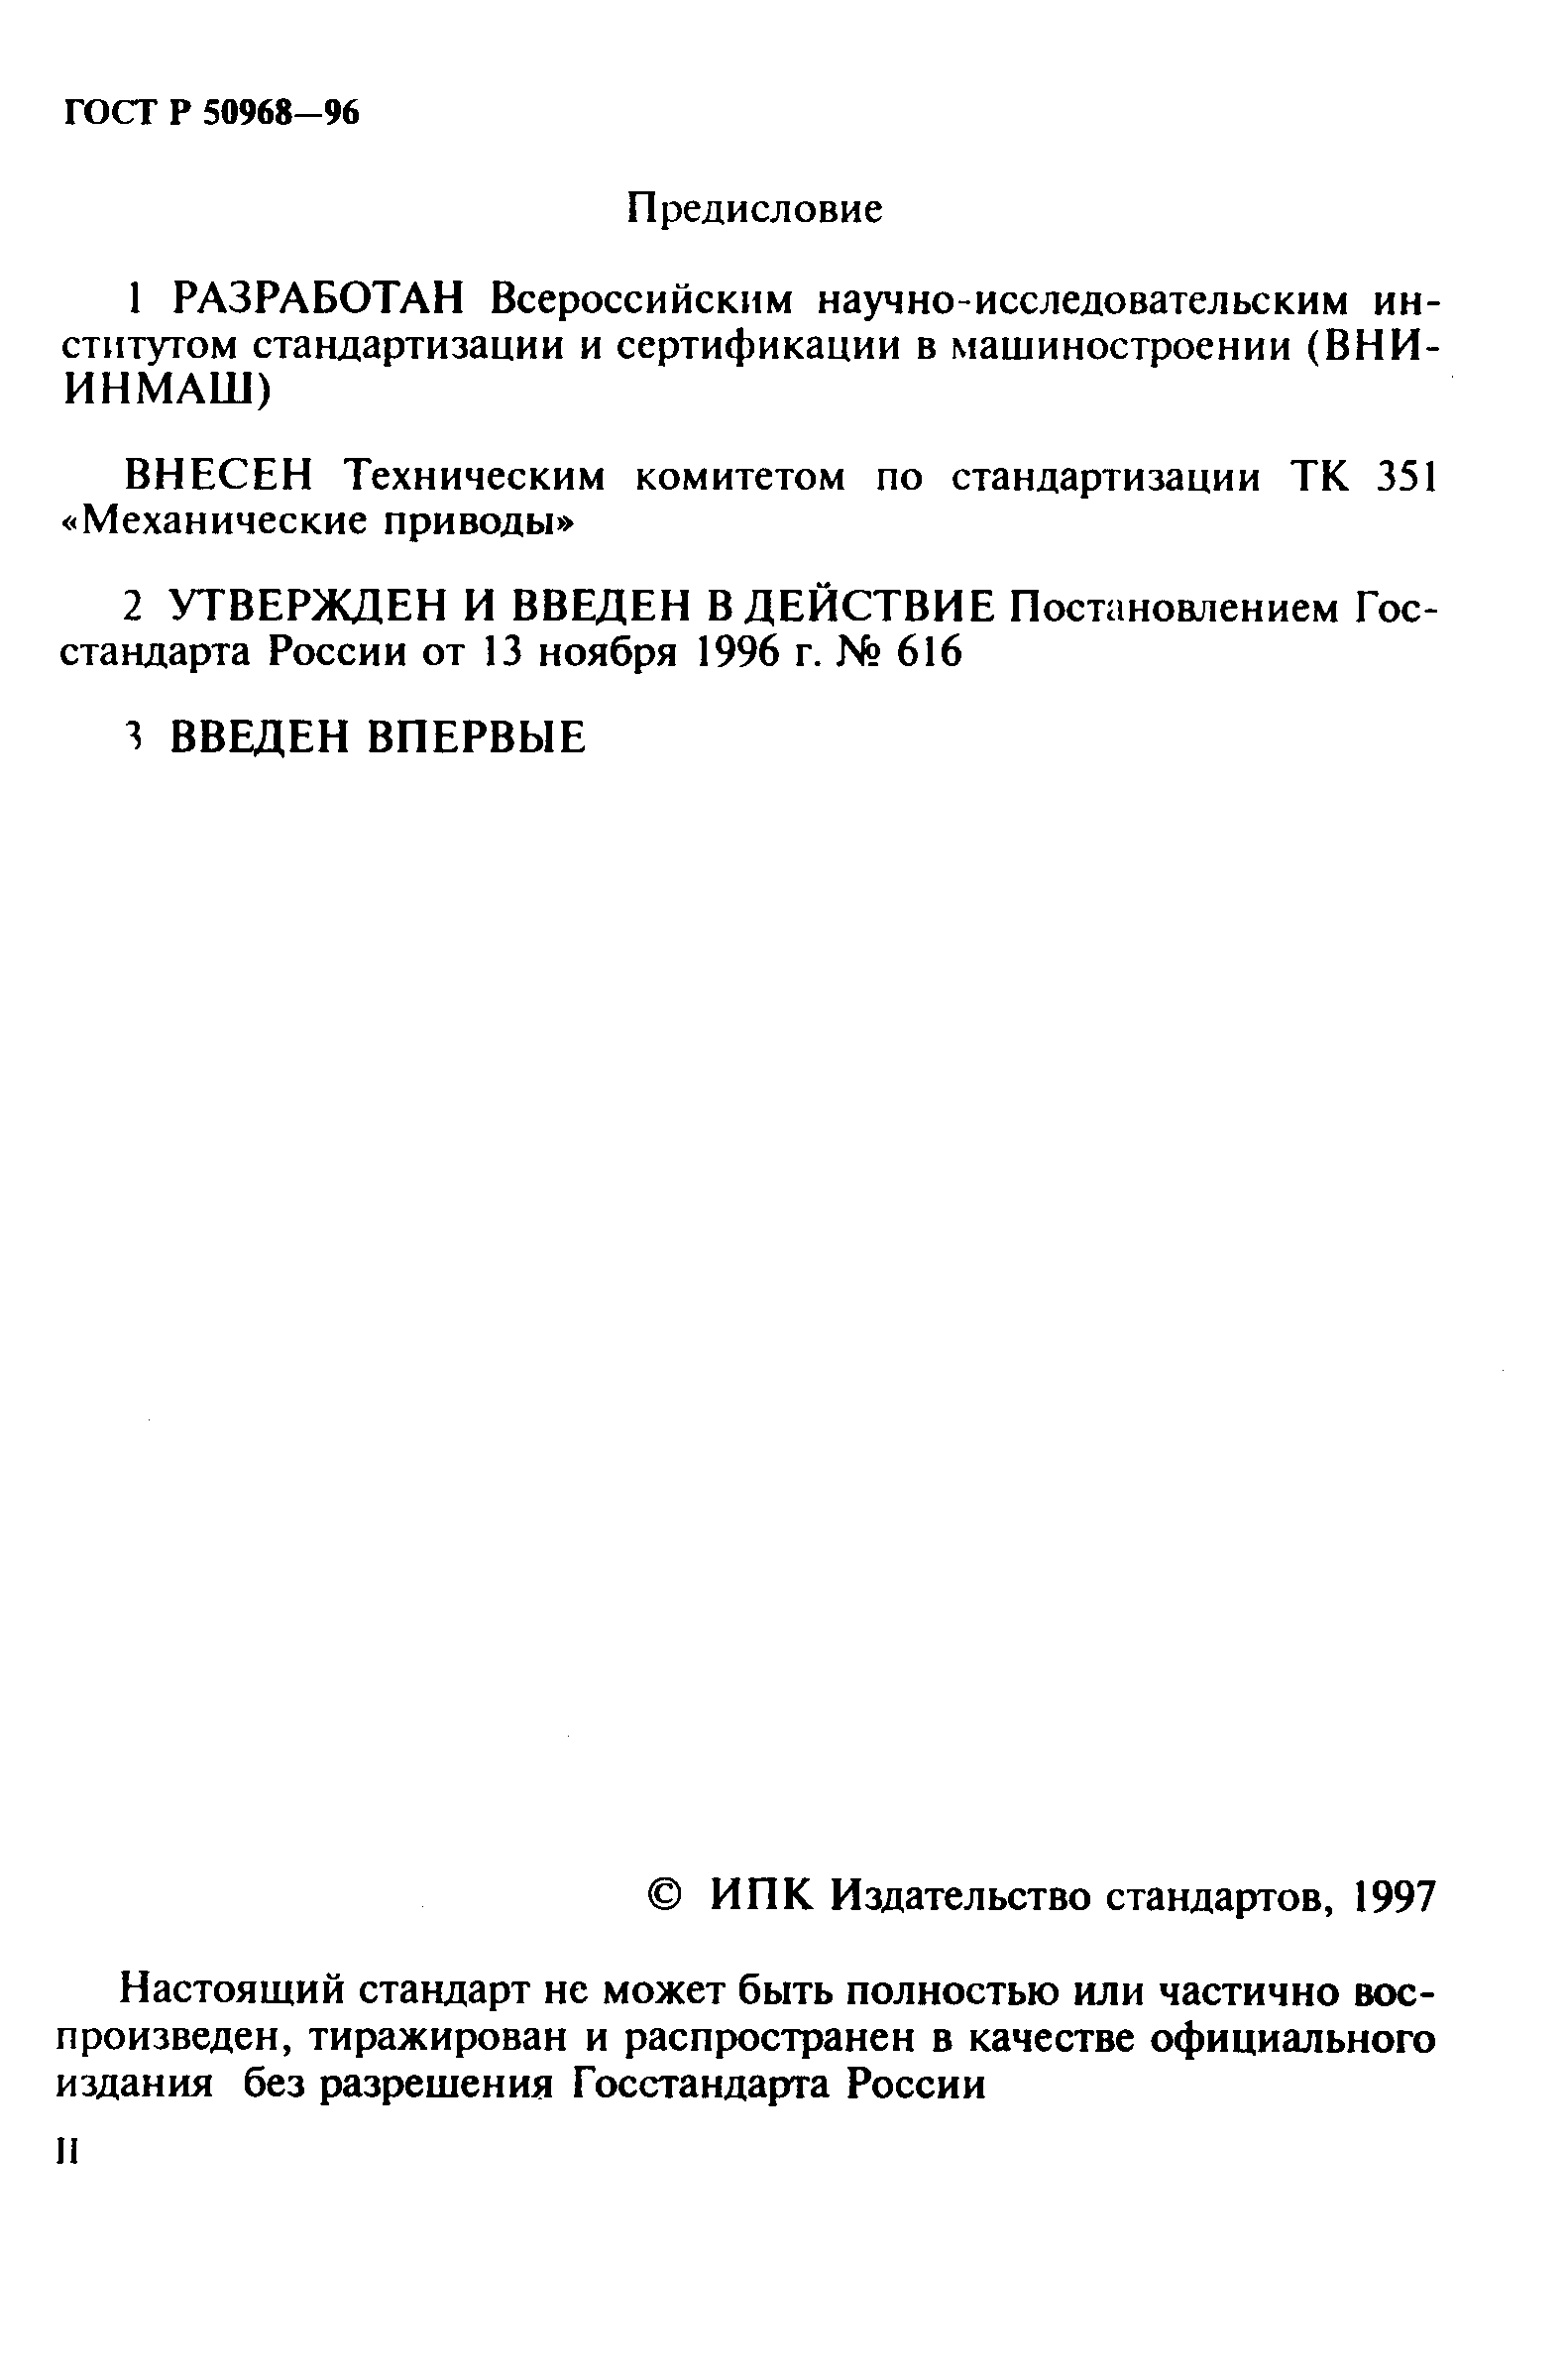 ГОСТ Р 50968-96